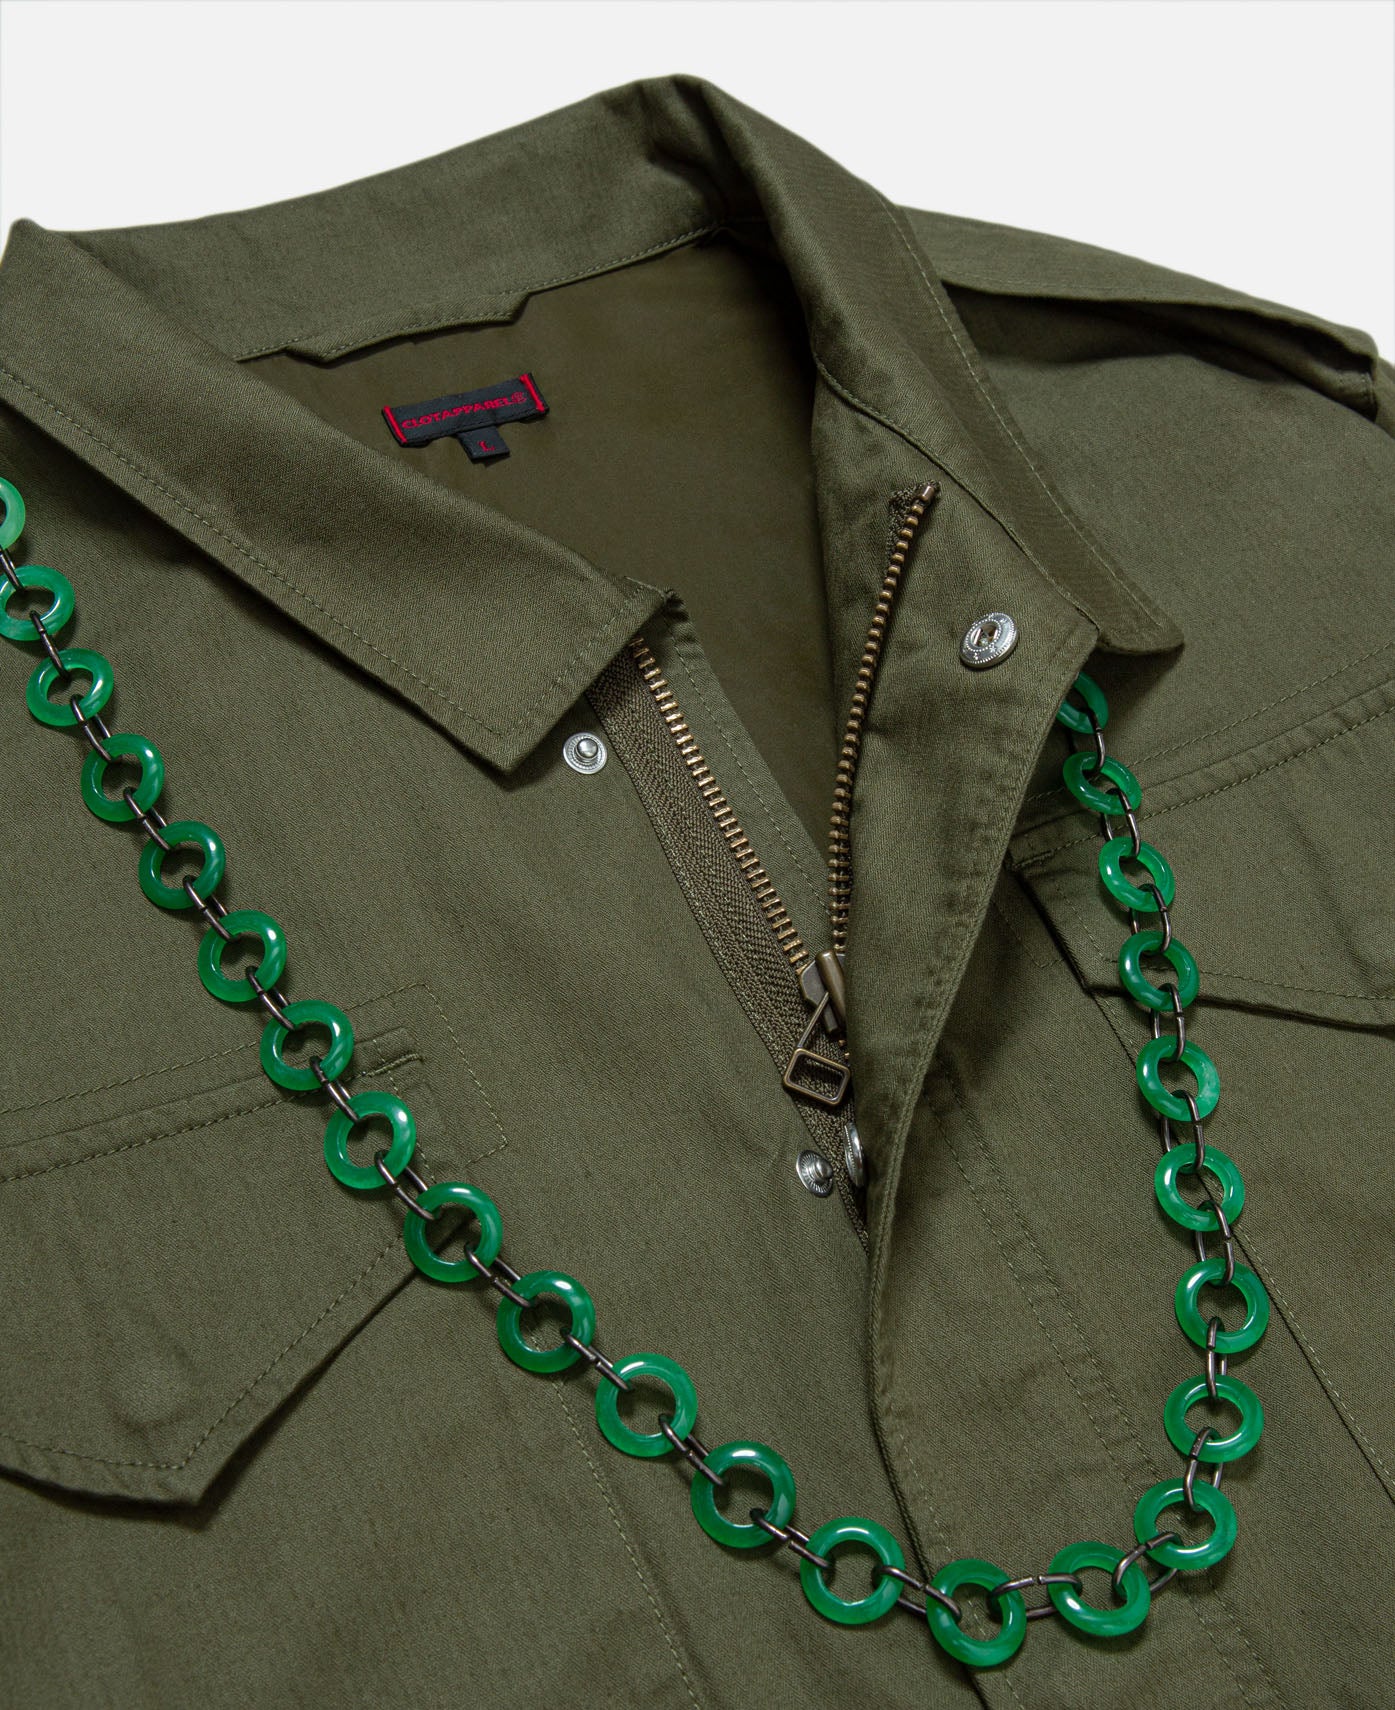 M65 Army Jacket - Olive